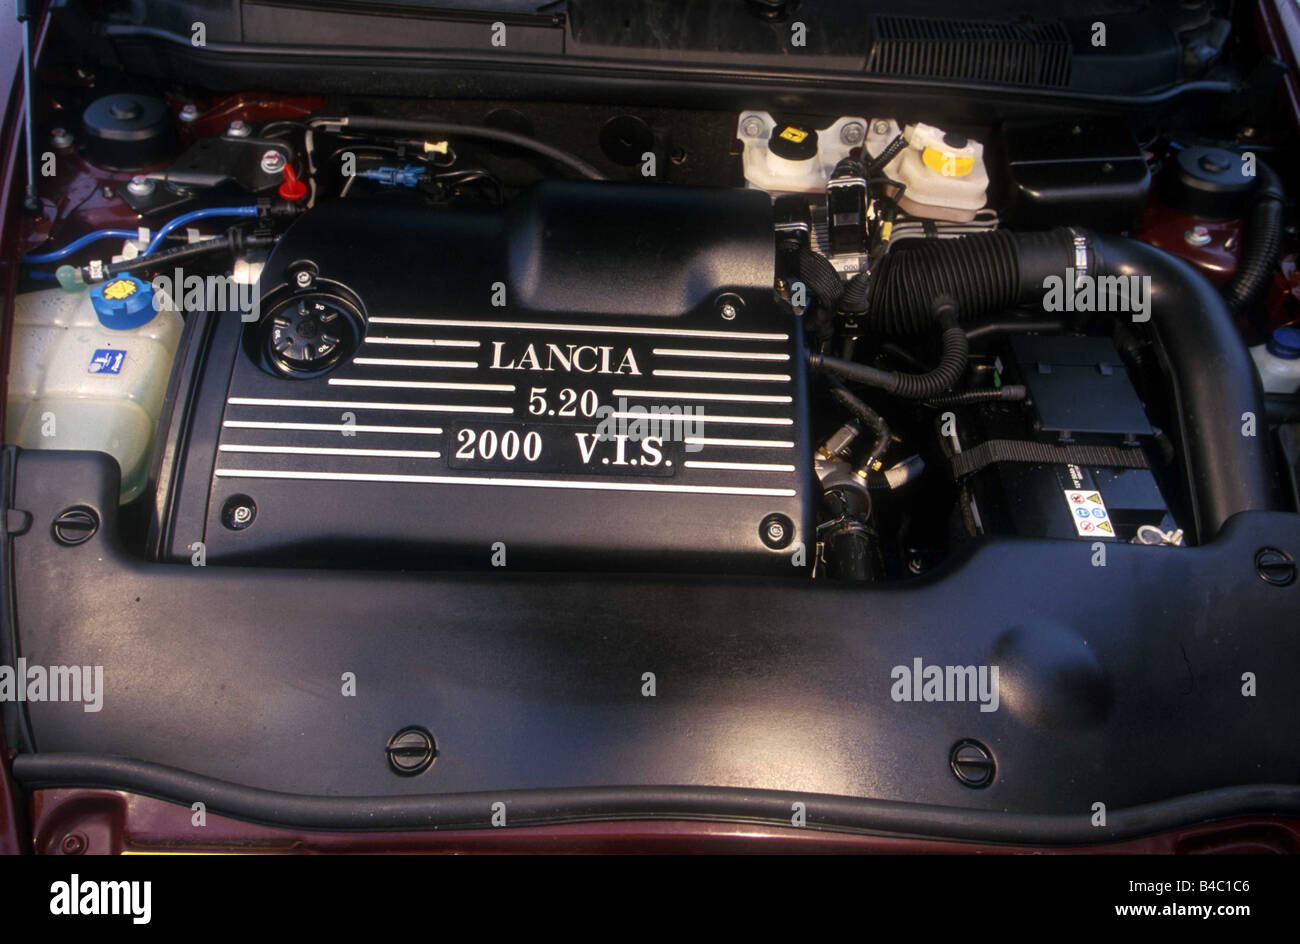 Lancia lybra hi-res stock photography and images - Alamy